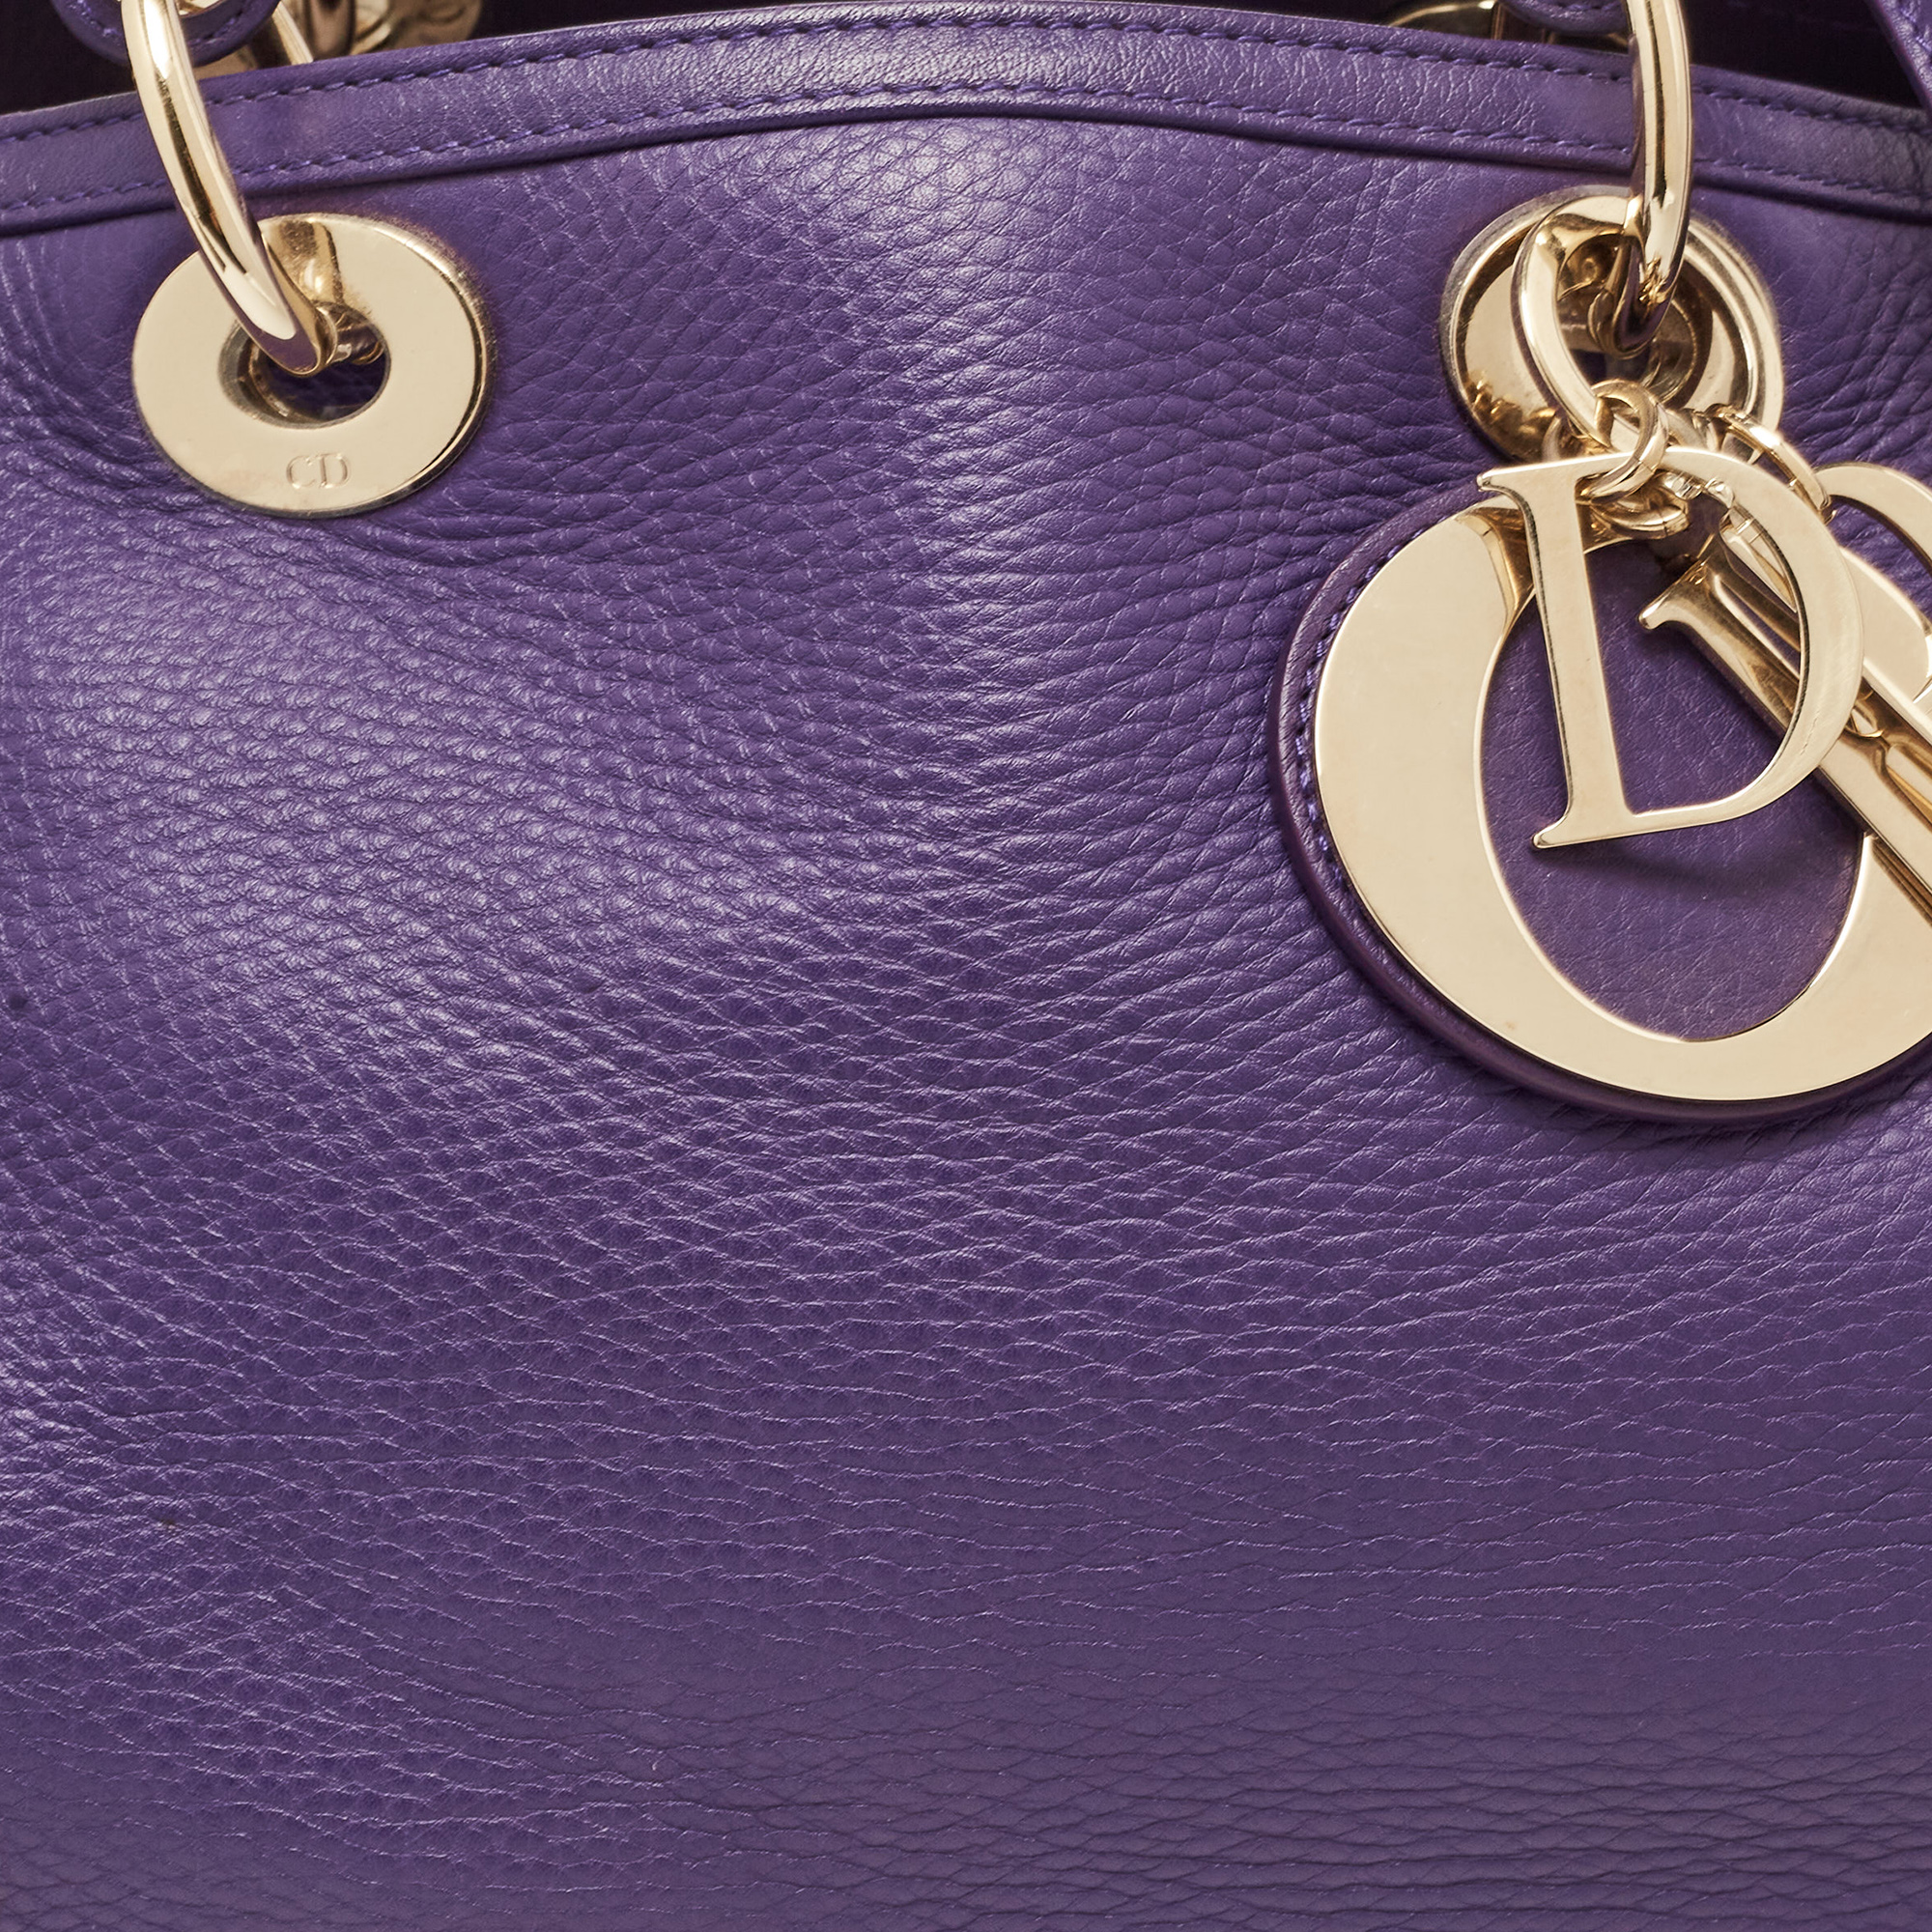 Dior Purple Leather Diorissimo Bowler Bag